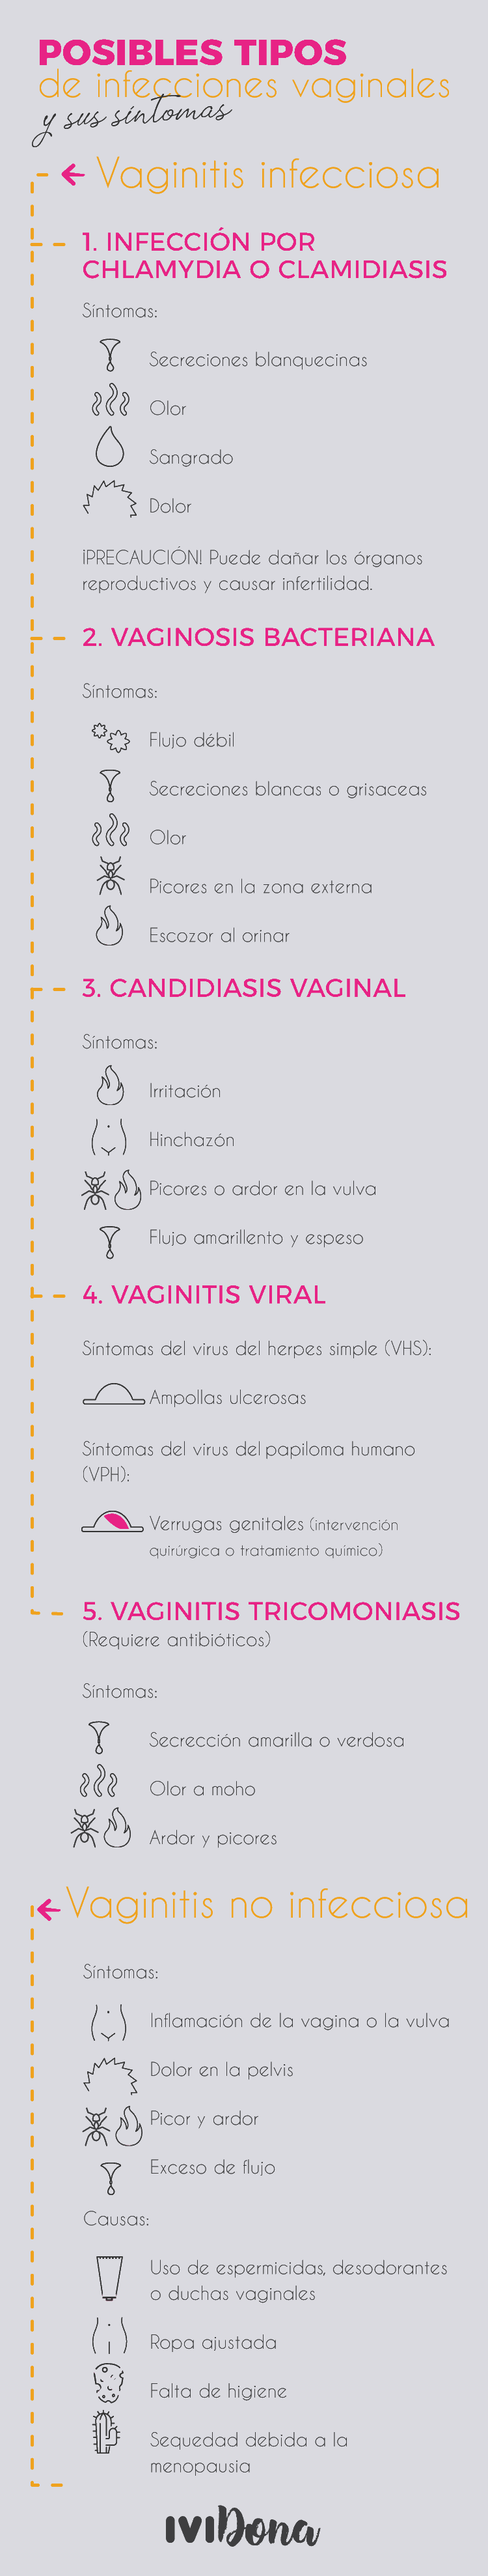 infeccion vaginal-infografia